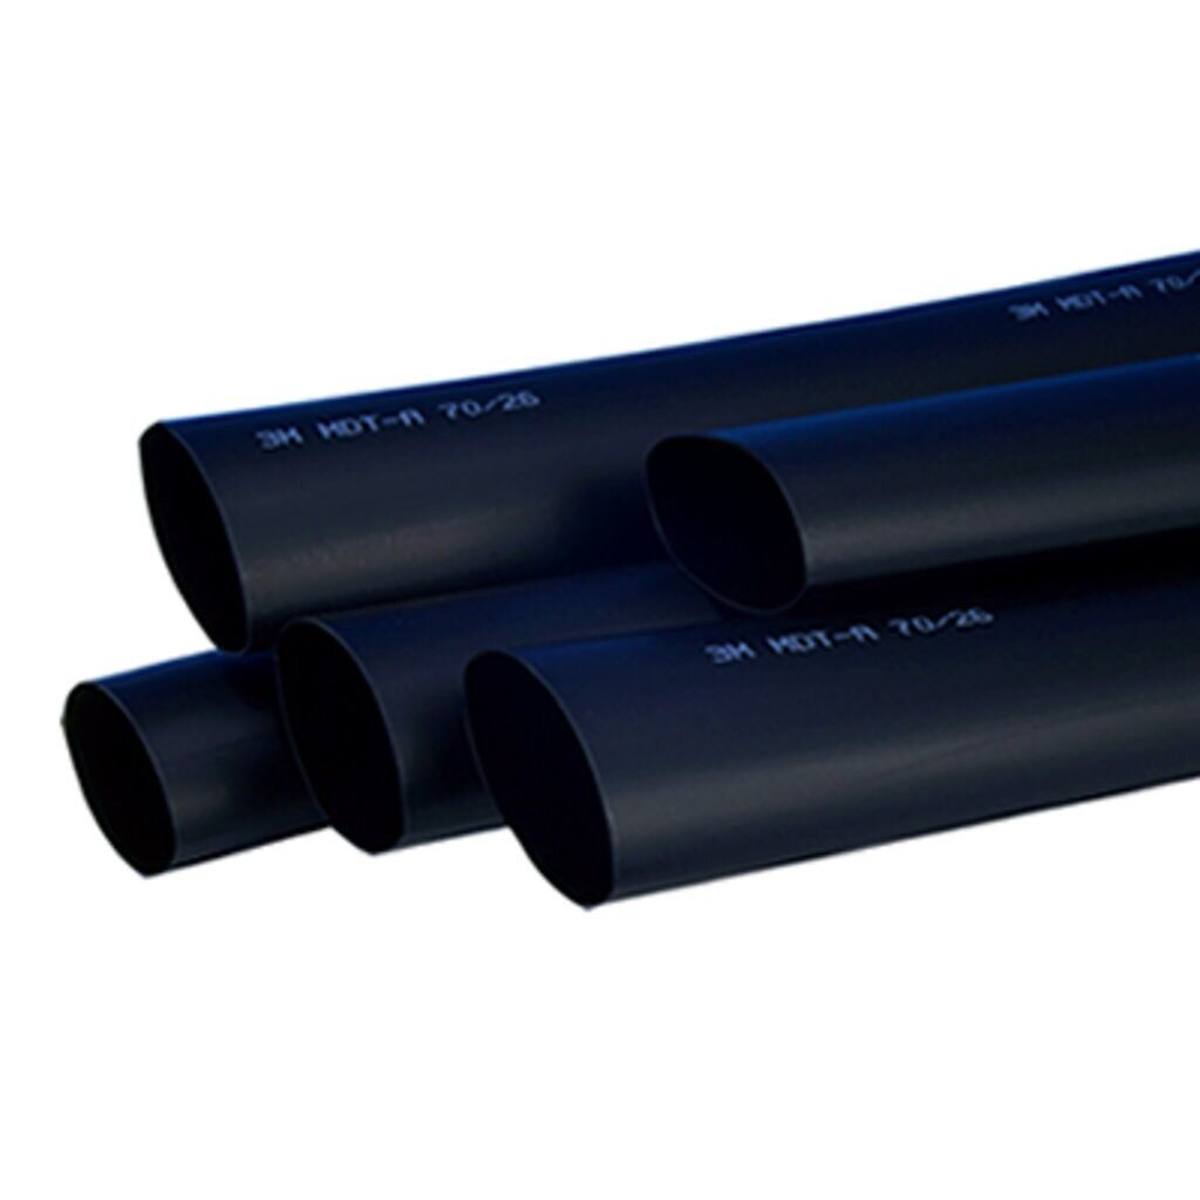 3M MDT-A Medium wall heat shrink tubing with adhesive, black, 32/7.5 mm, 1 m